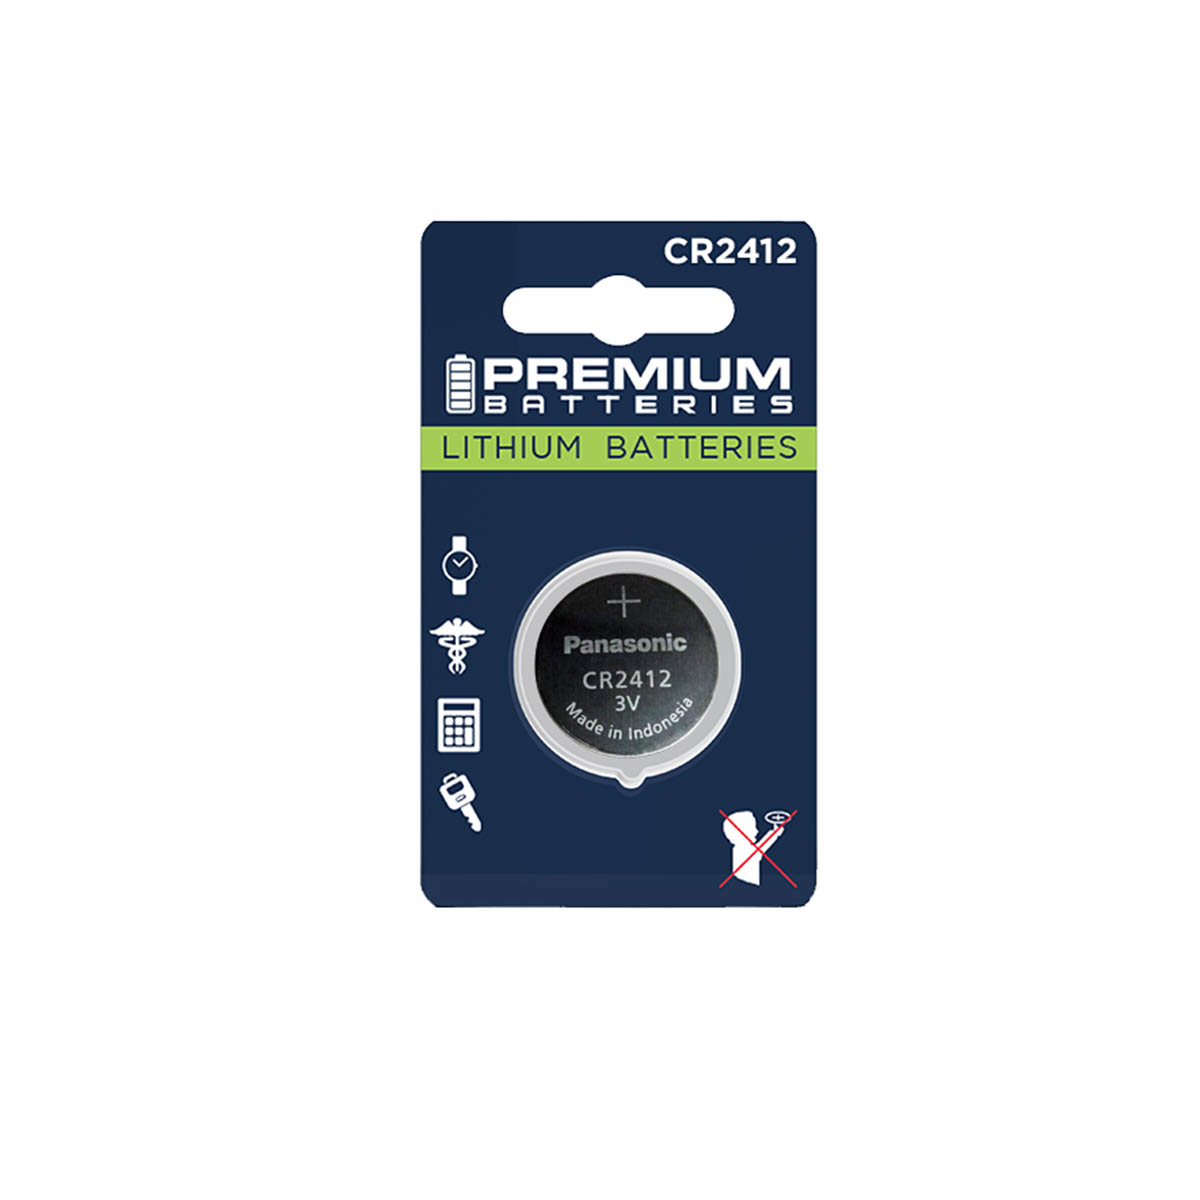 Premium Batteries CR2412 Battery 3V Lithium Coin Cell (1 PCS Child Resistant Blister Package) 